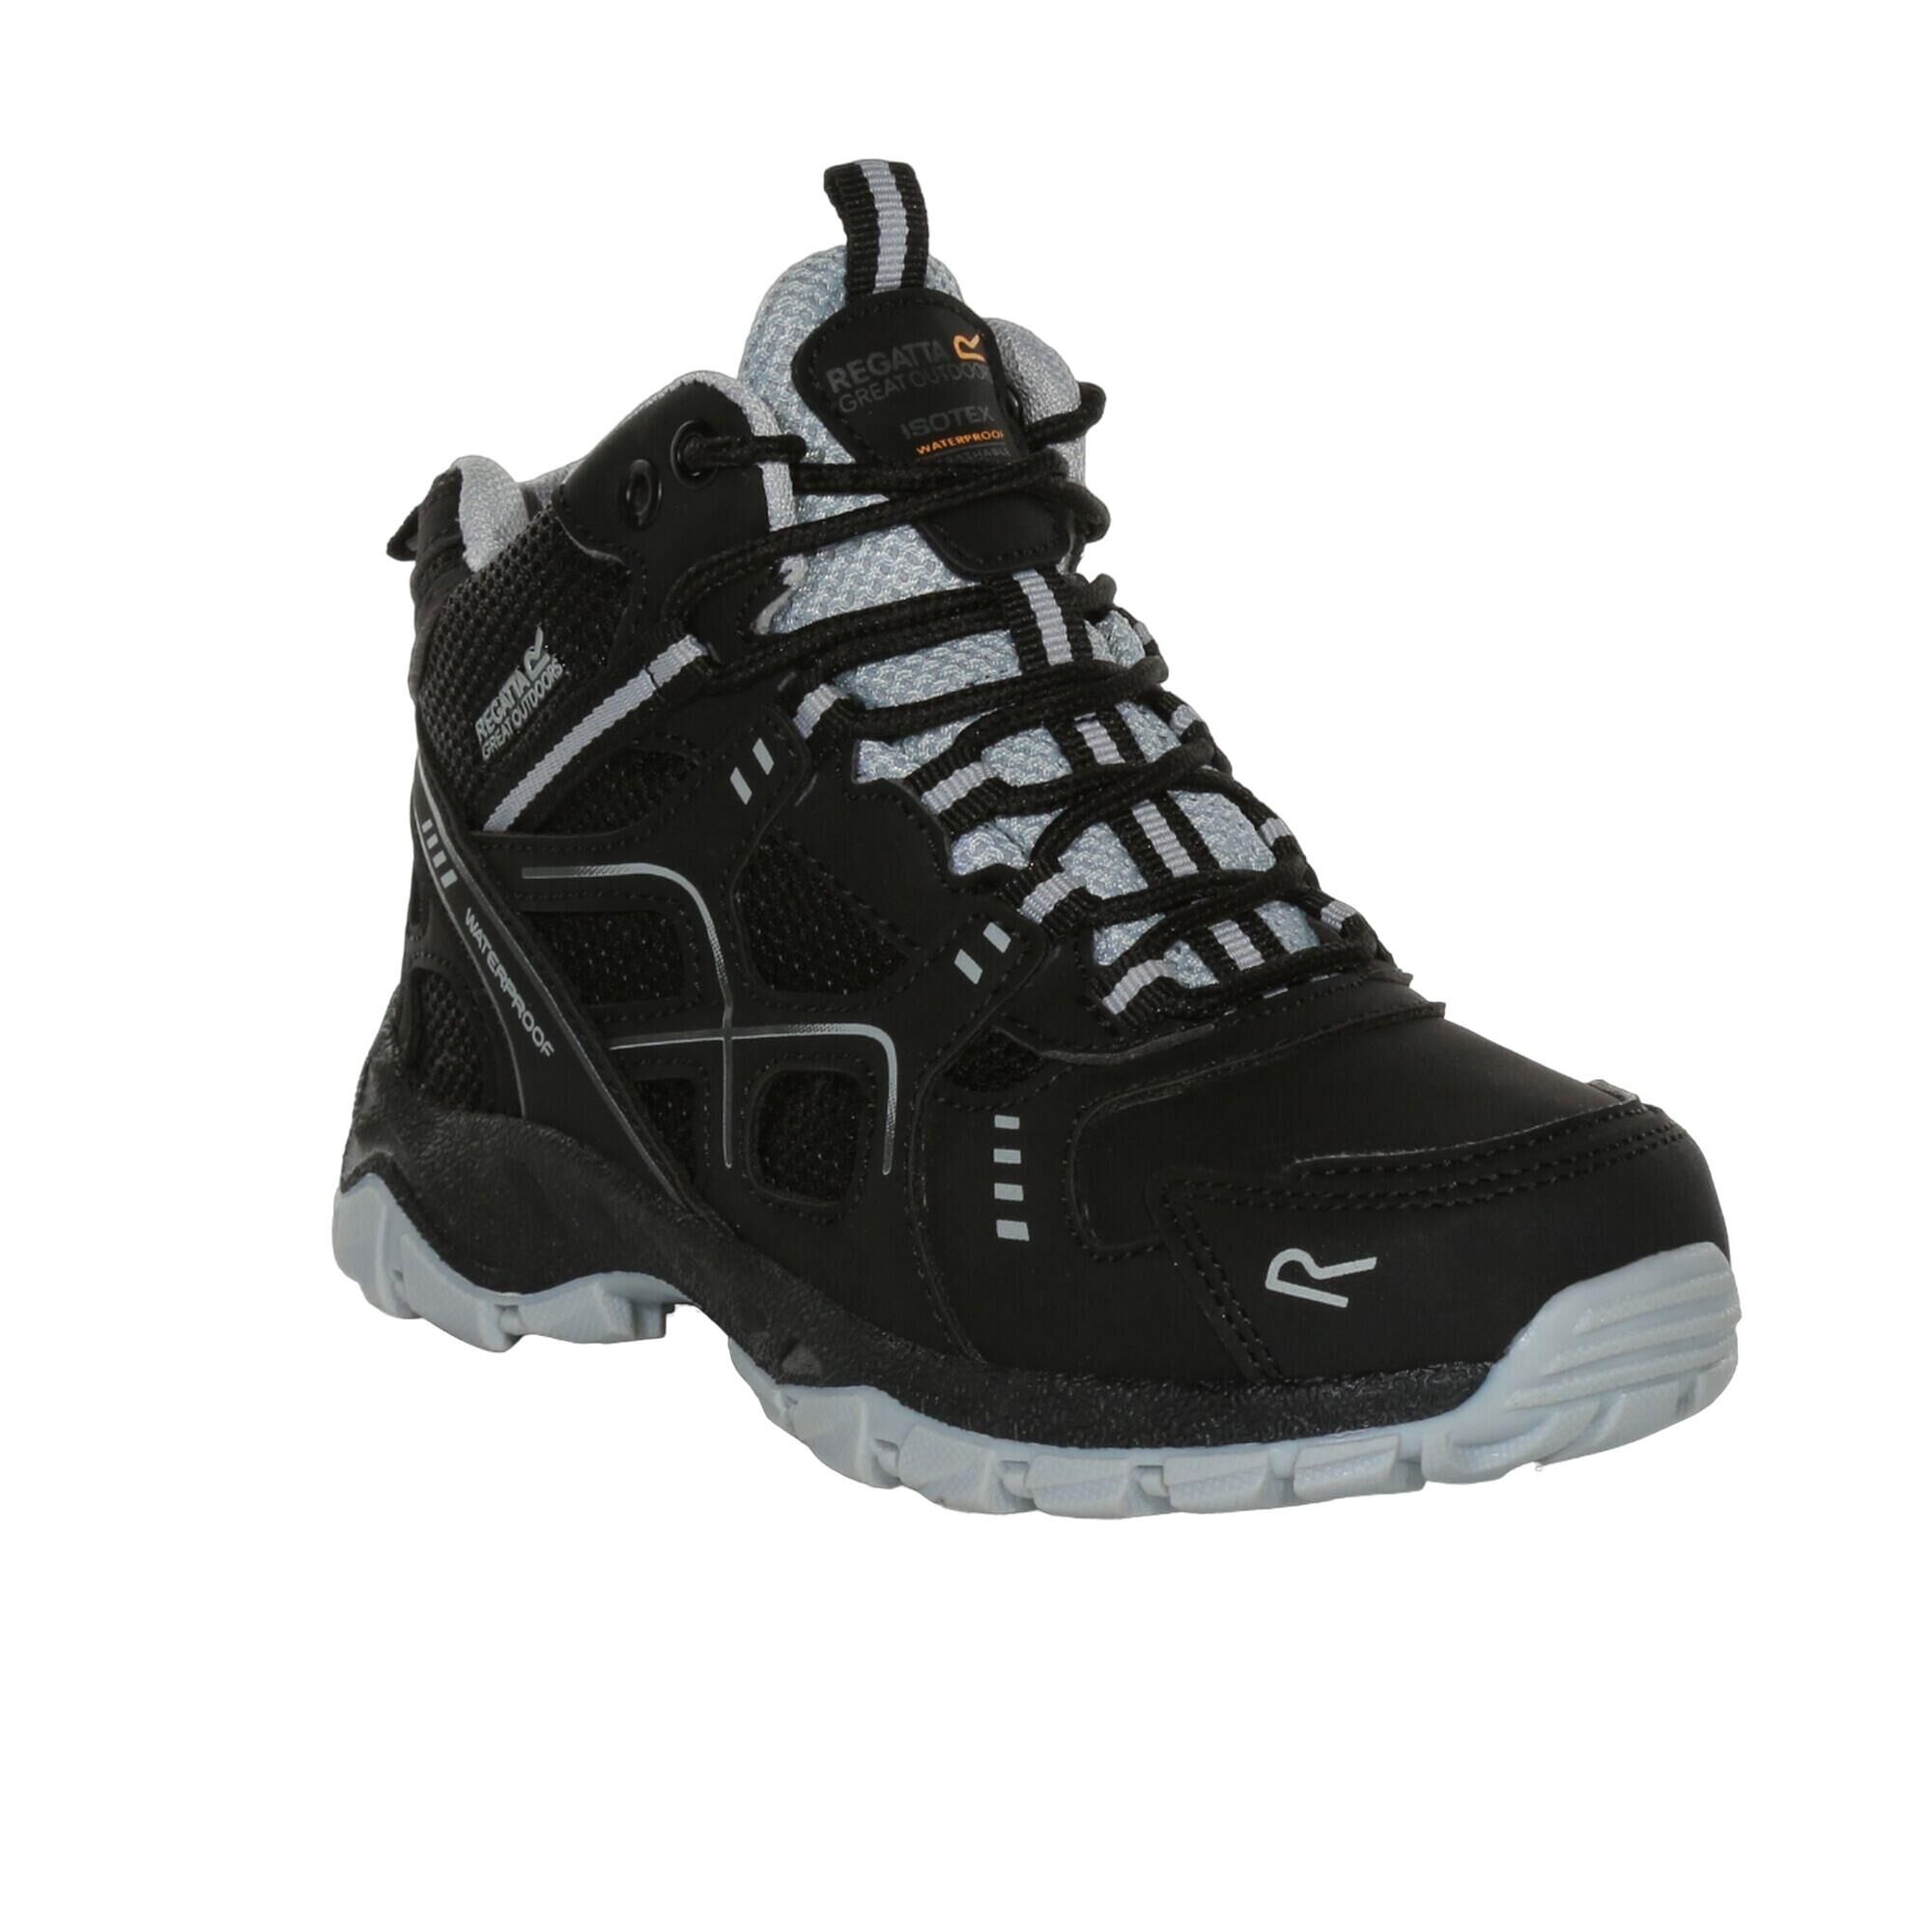 REGATTA Childrens/Kids Vendeavour Walking Boots (Black/Light Steel)